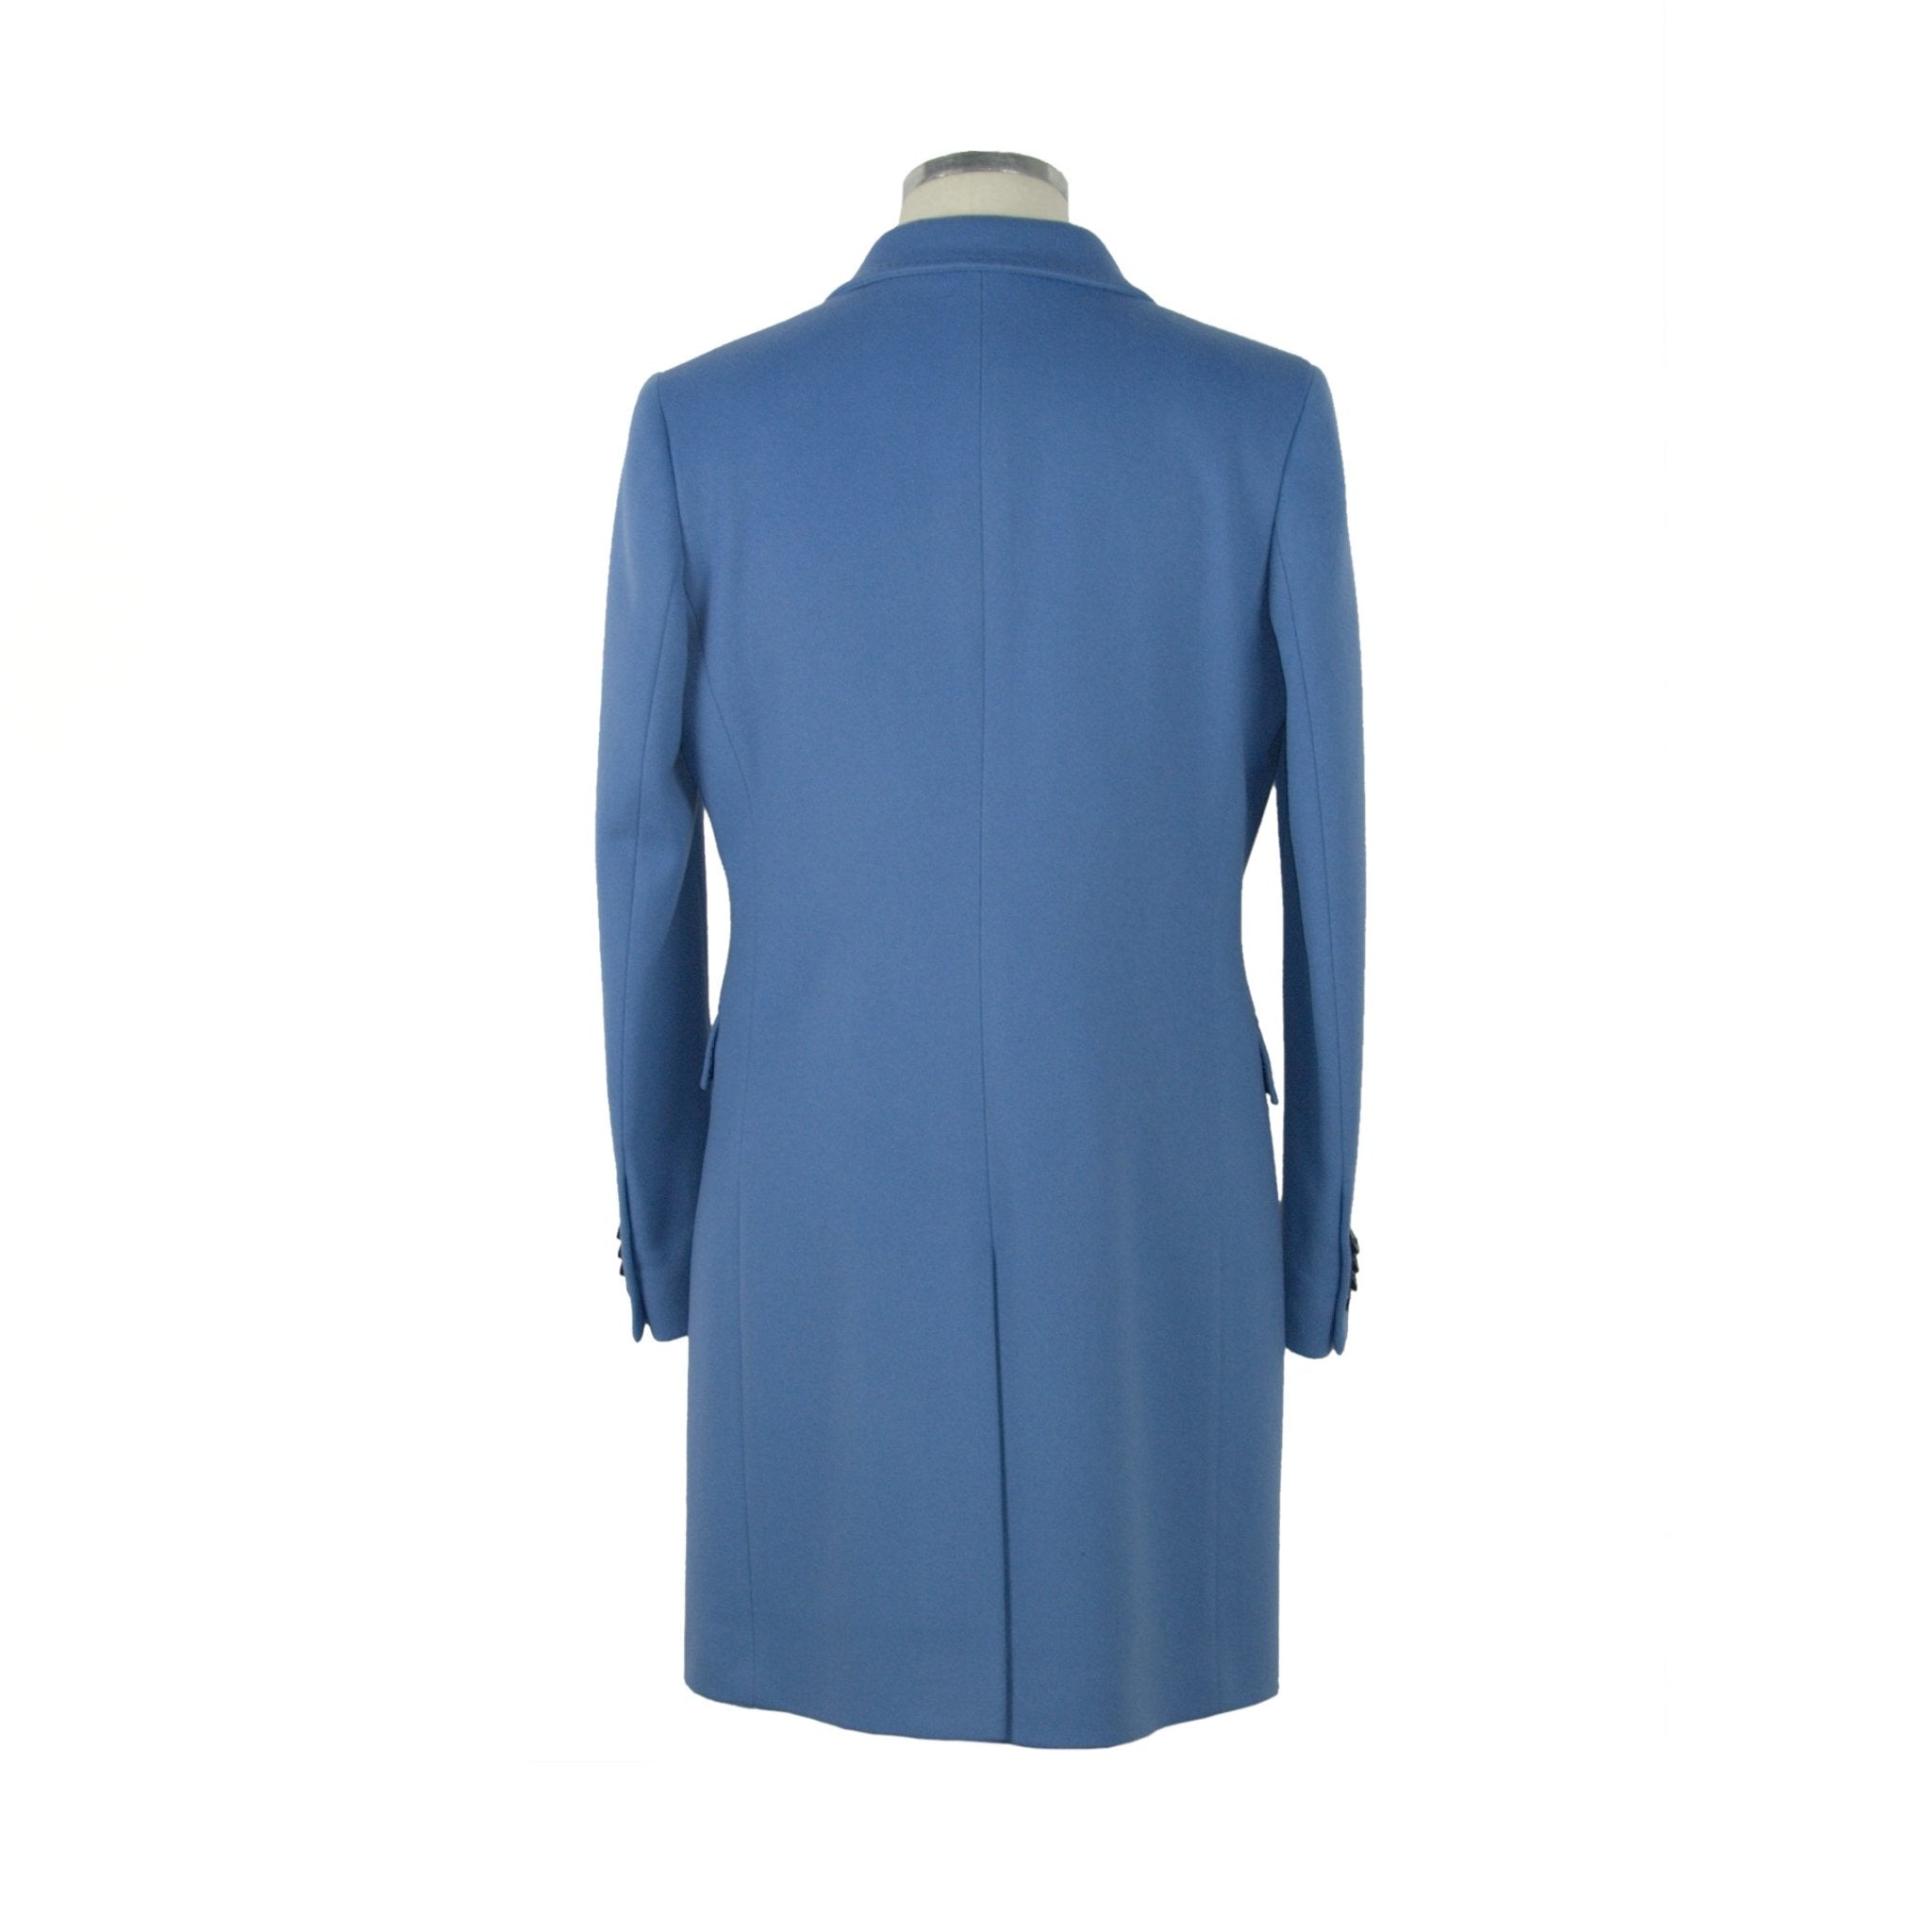 Made in Italy Light Blue Wool Jackets & Coat - Fizigo